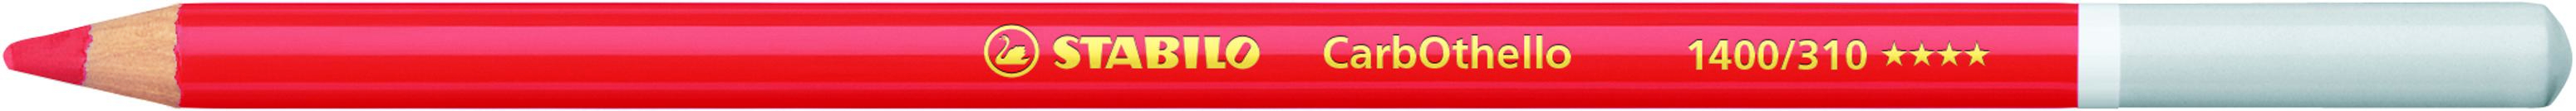 CARBOTHELLO PASTEL PENCILS - CARMINE RED 1400/310